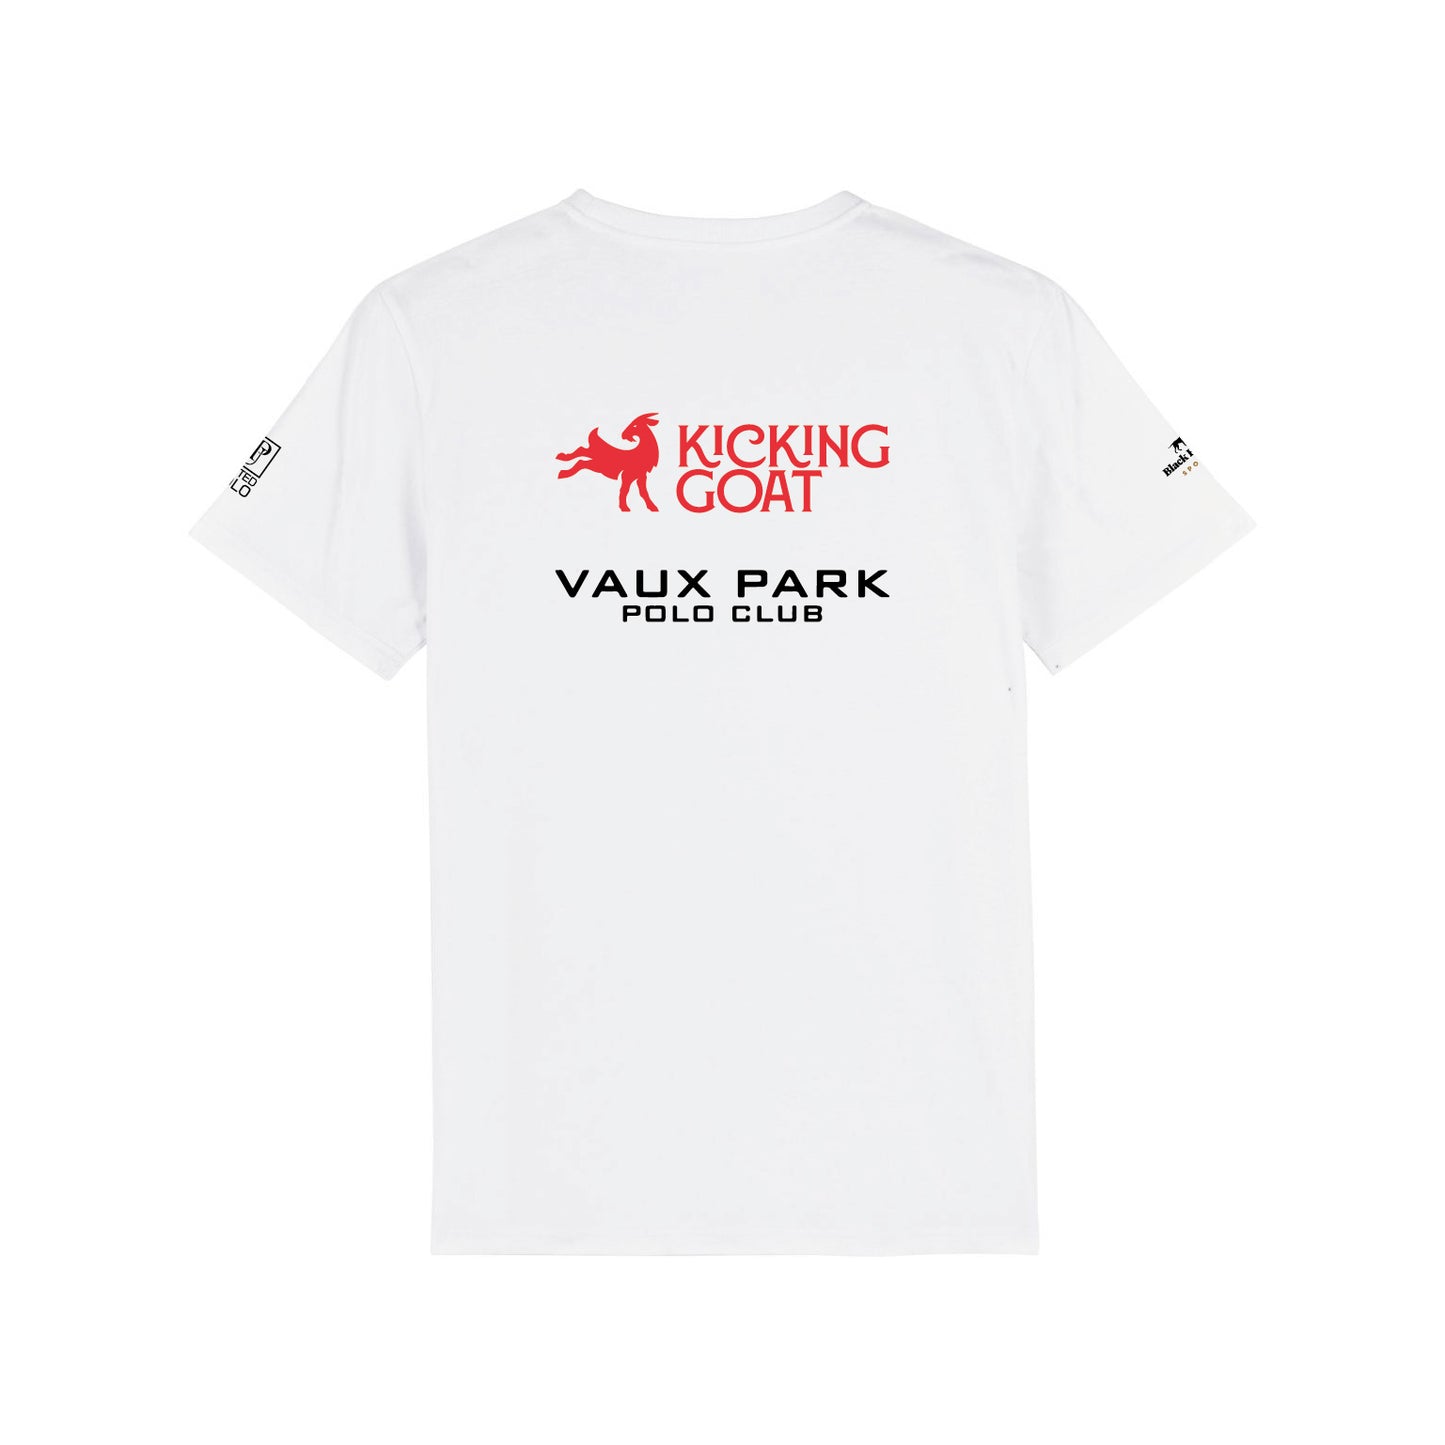 Vaux Park/Kicking Goat T-Shirt